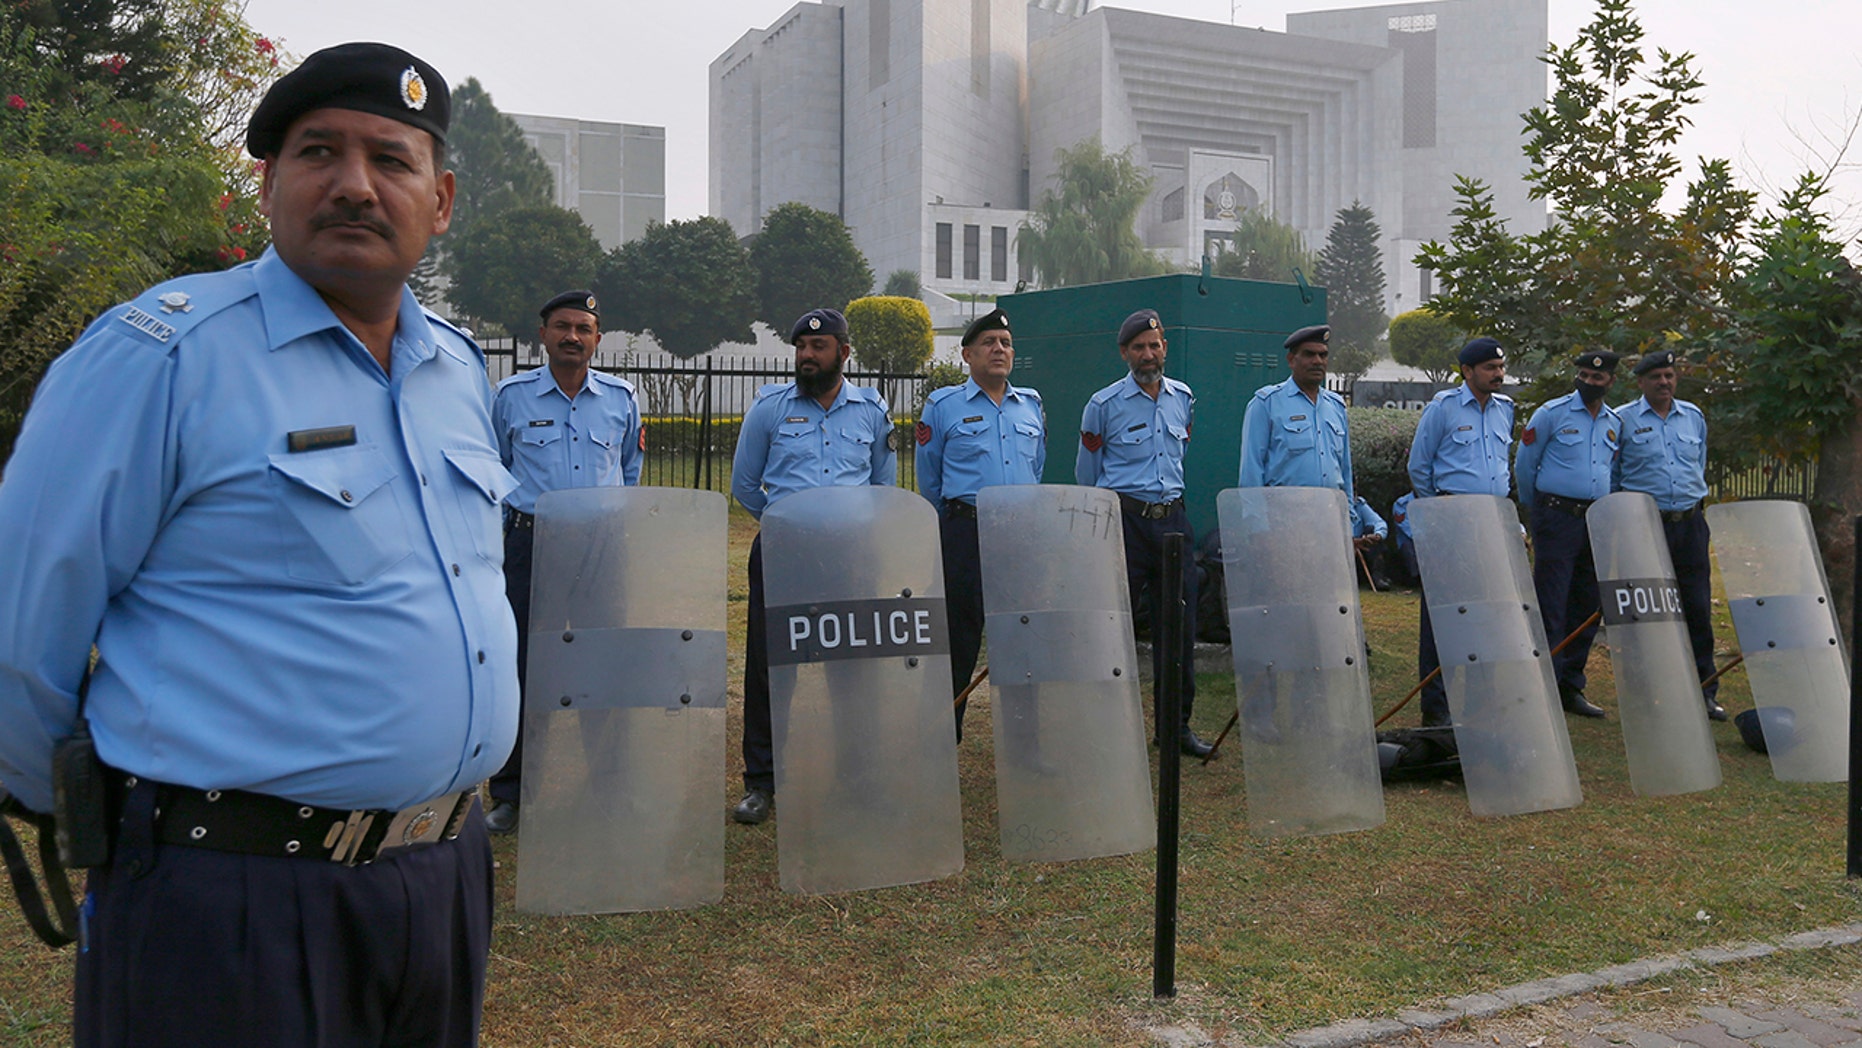 Aasia Bibi Won’t be Executed, Pakistan SC Rules in Blasphemy Case